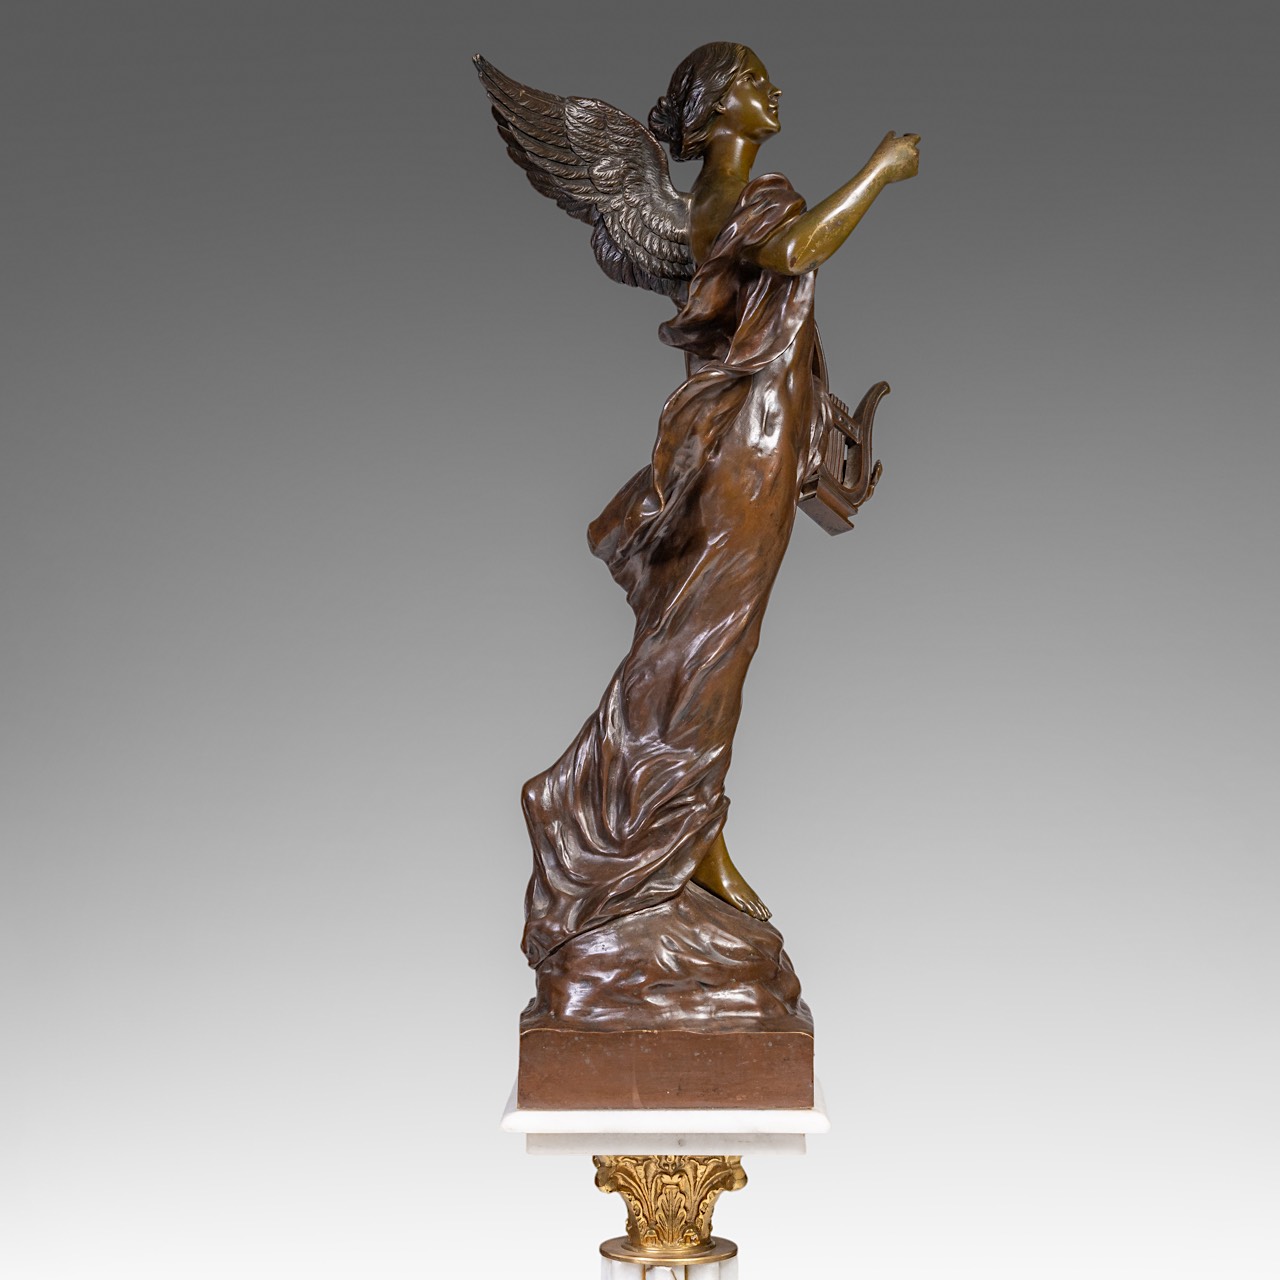 Pierre Etienne Daniel Campagne (1851-1914), 'L'inspiration', patinated bronze, H 85 cm - Image 23 of 26